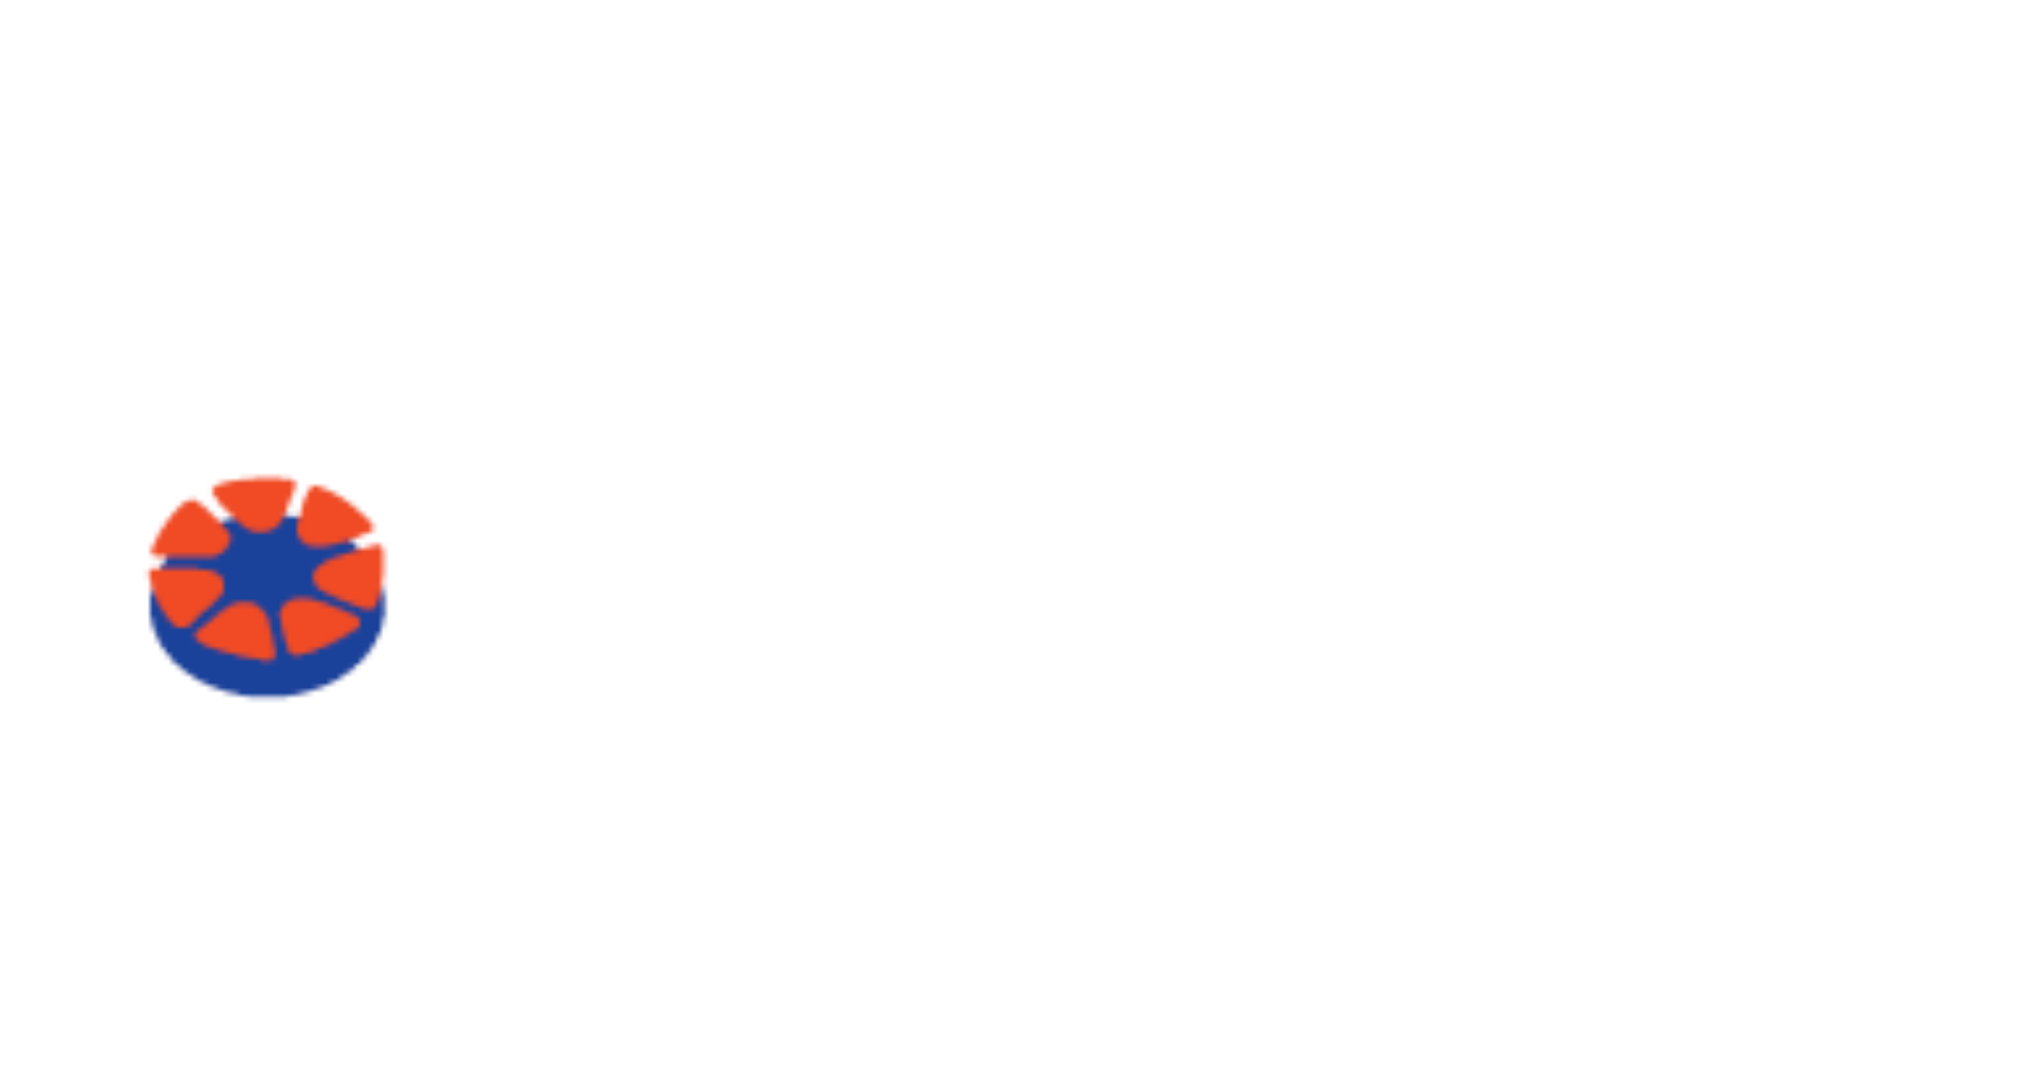 Tobago Hotel & Tourism Association